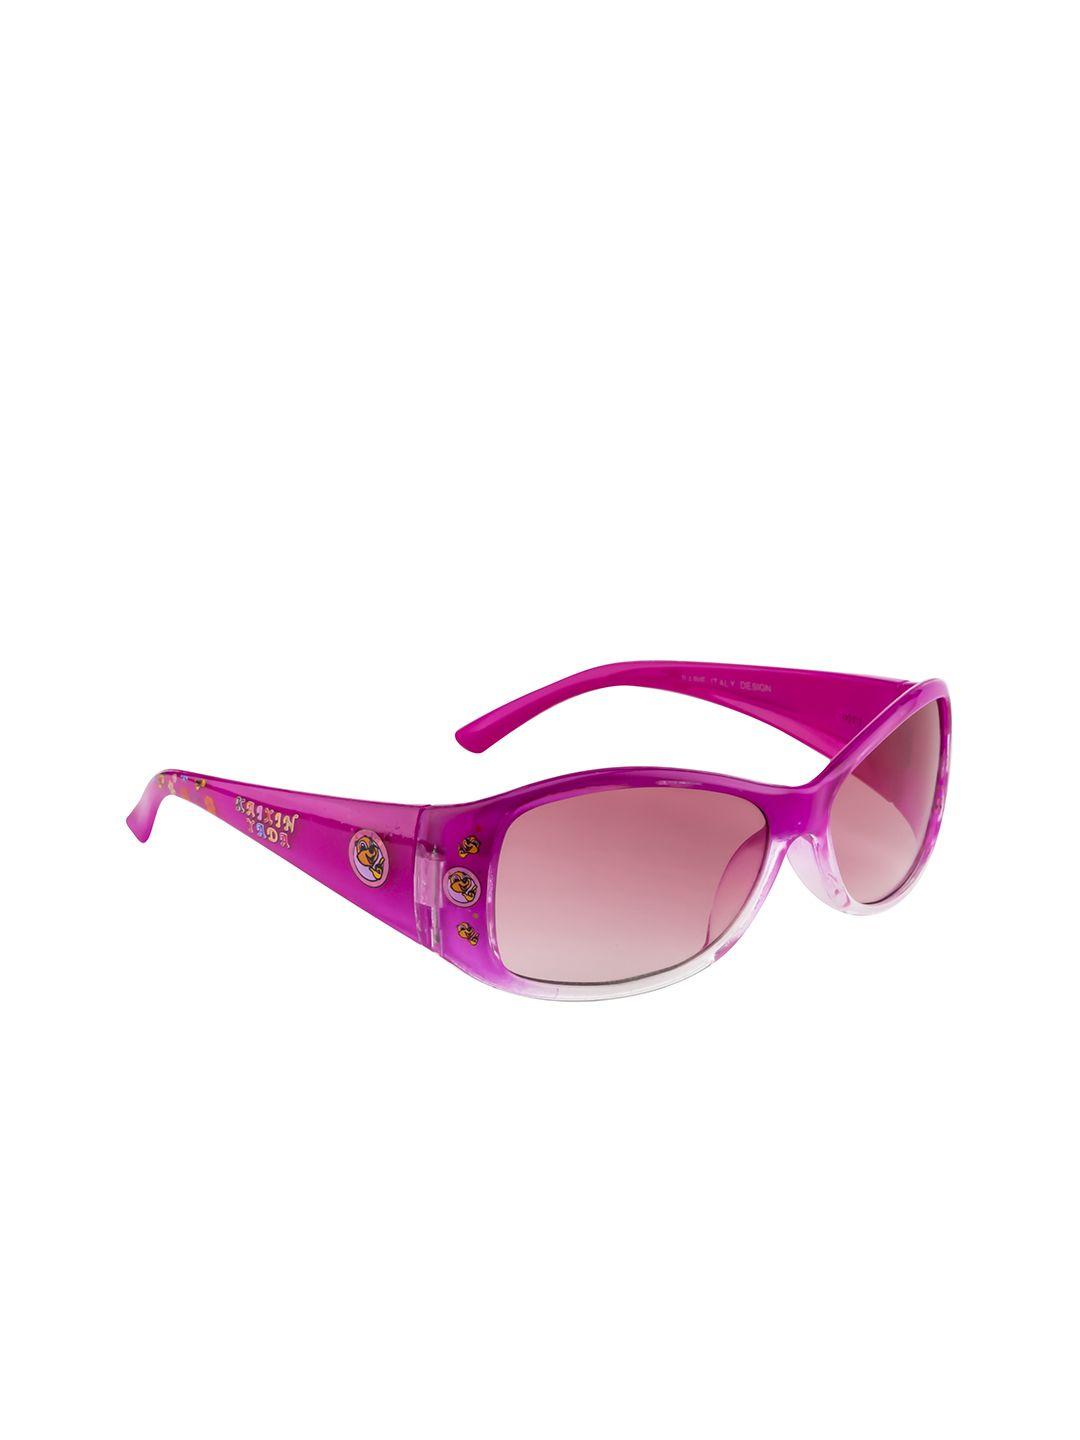 yk unisex kids sports sunglasses with uv protected lens yk-j8186